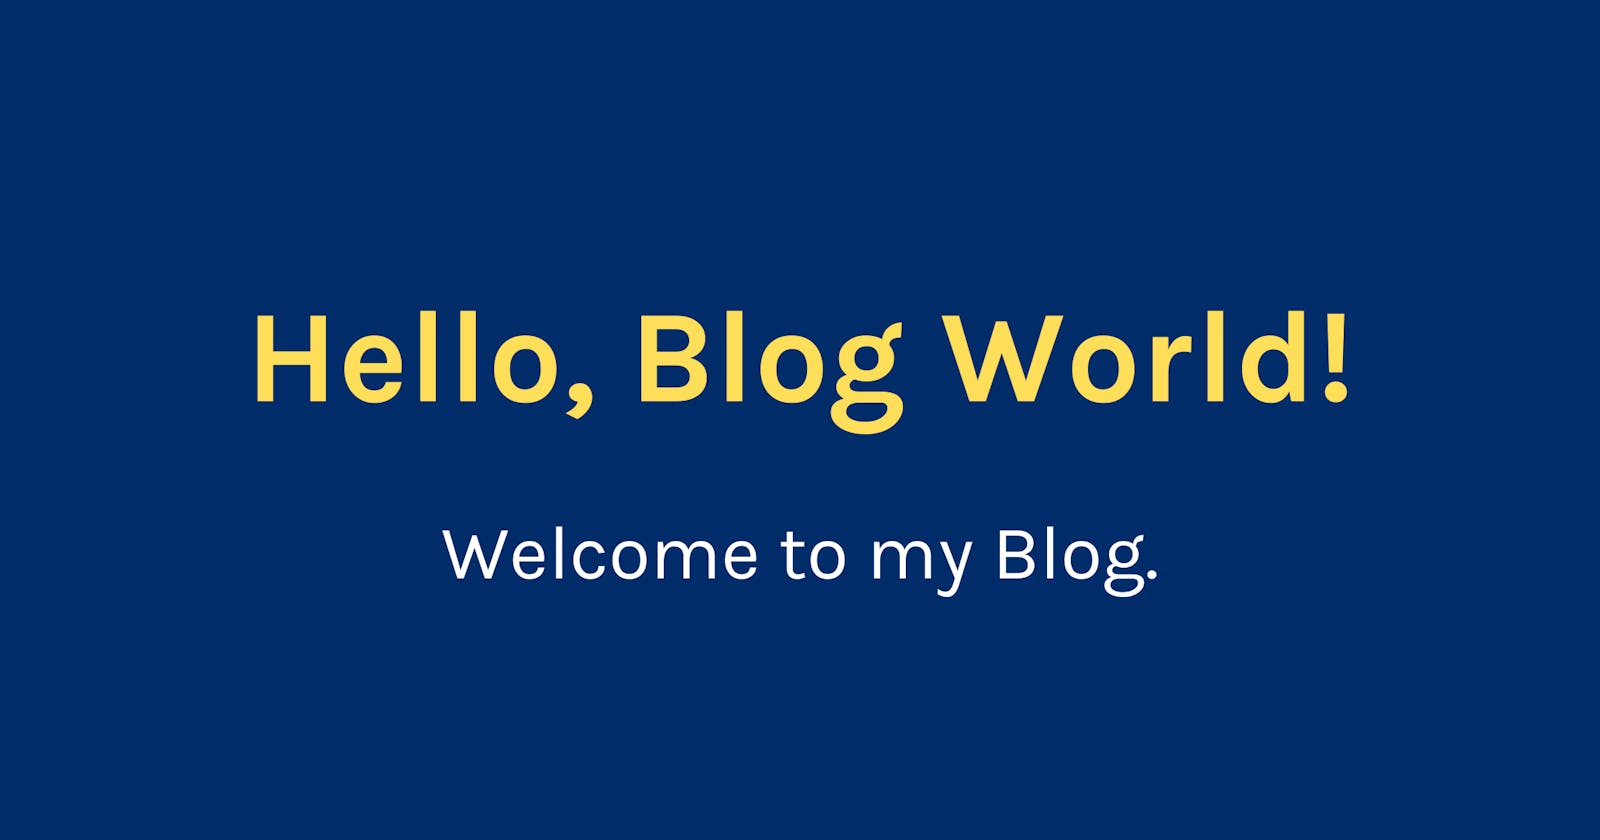 Hello, Blog World!